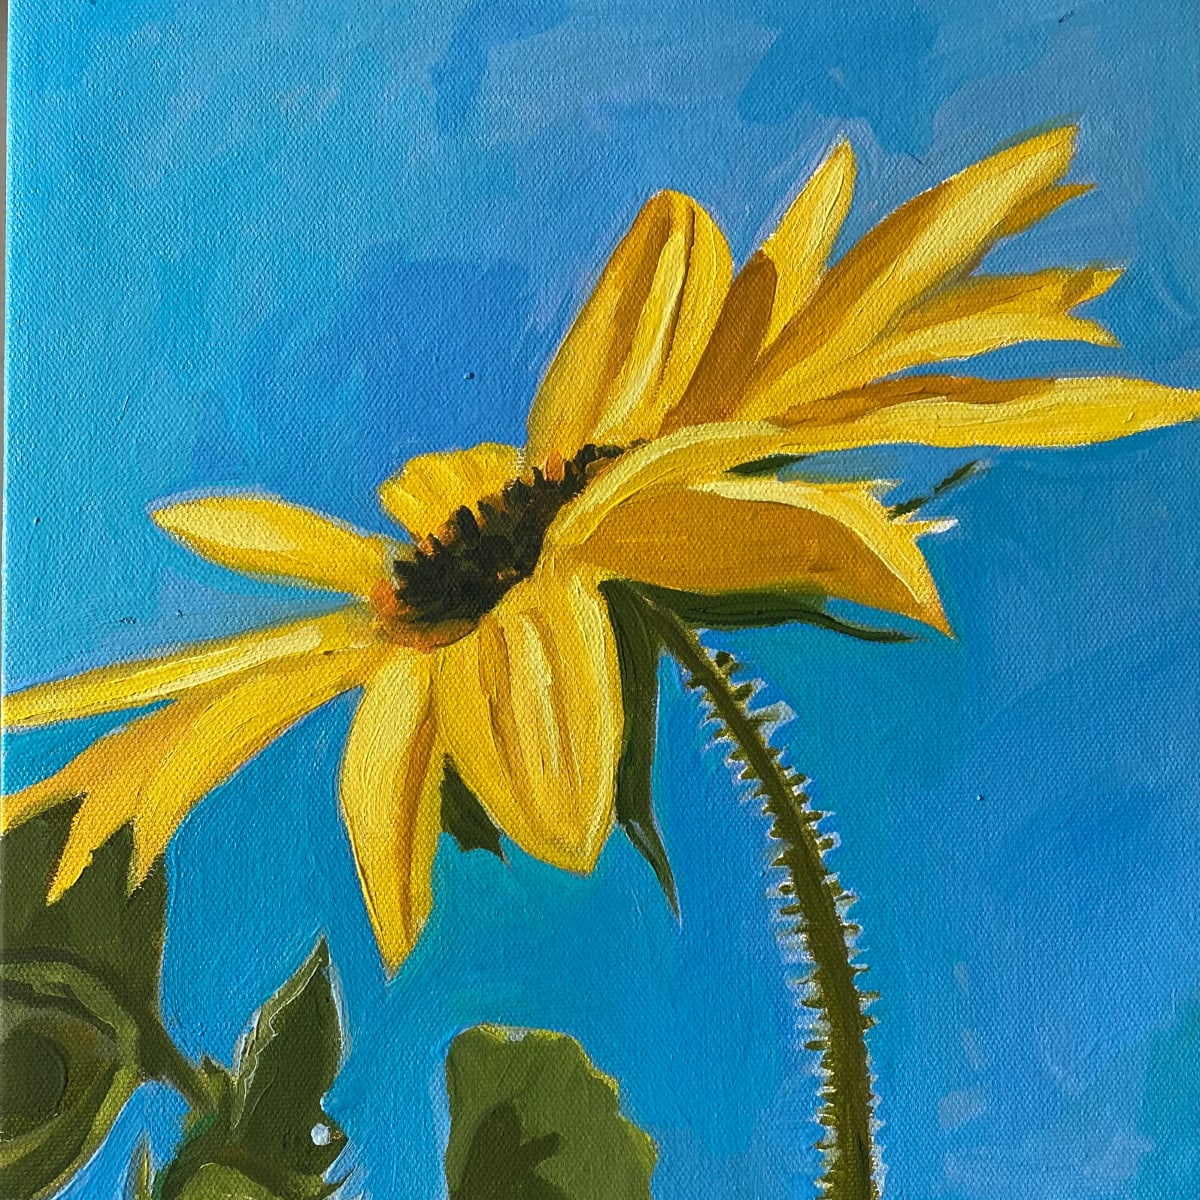 1. Sunflower 